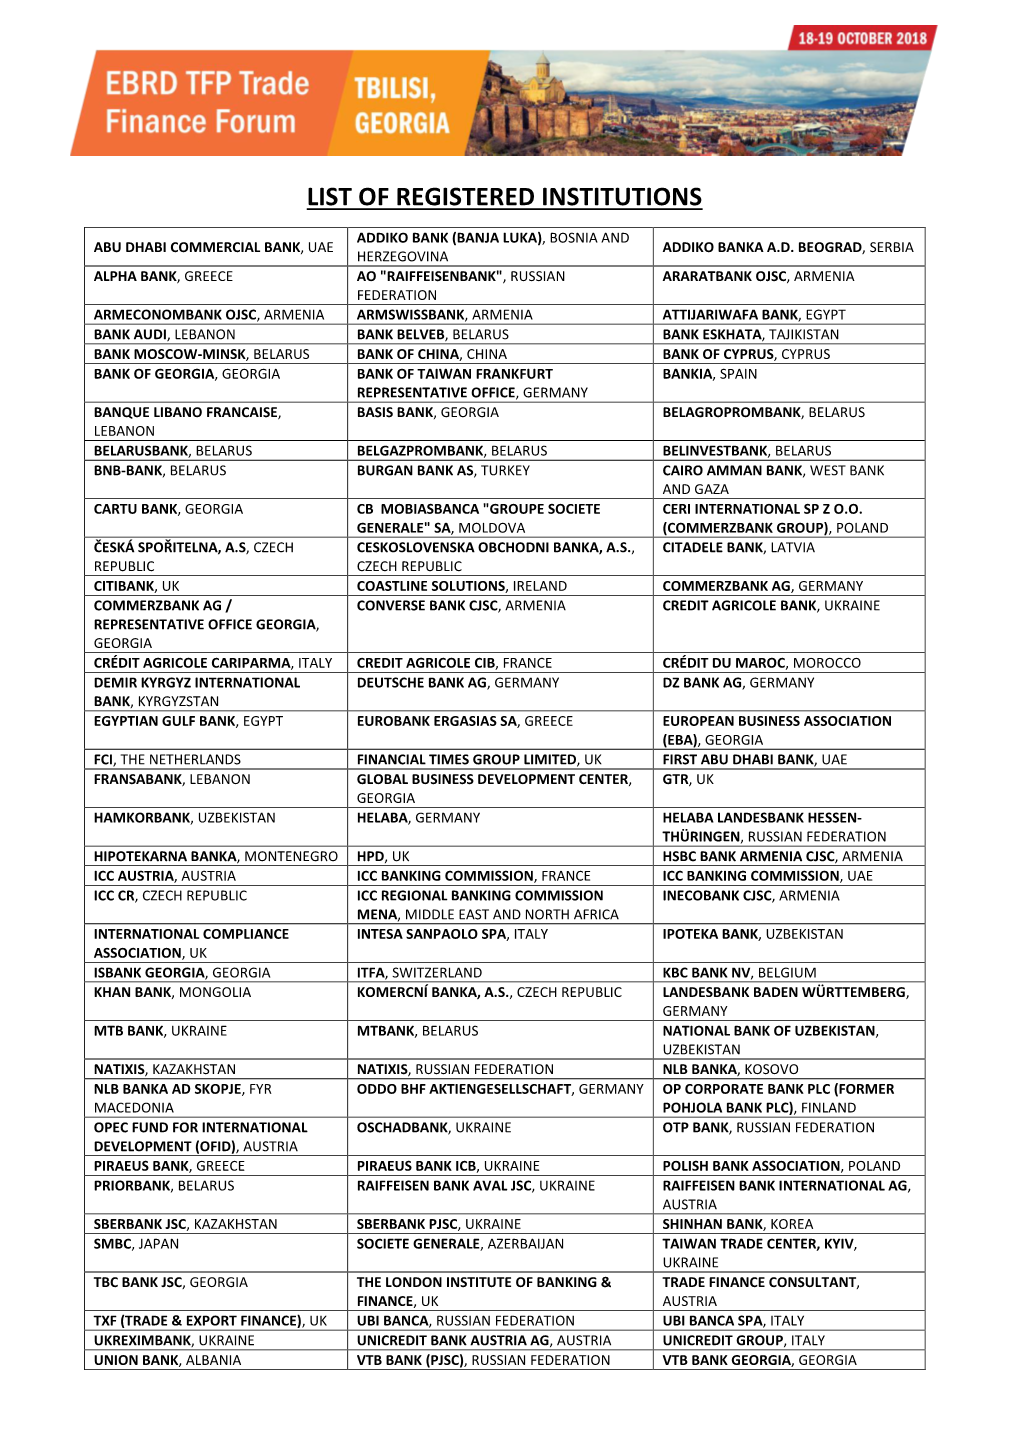 List of Registered Institutions